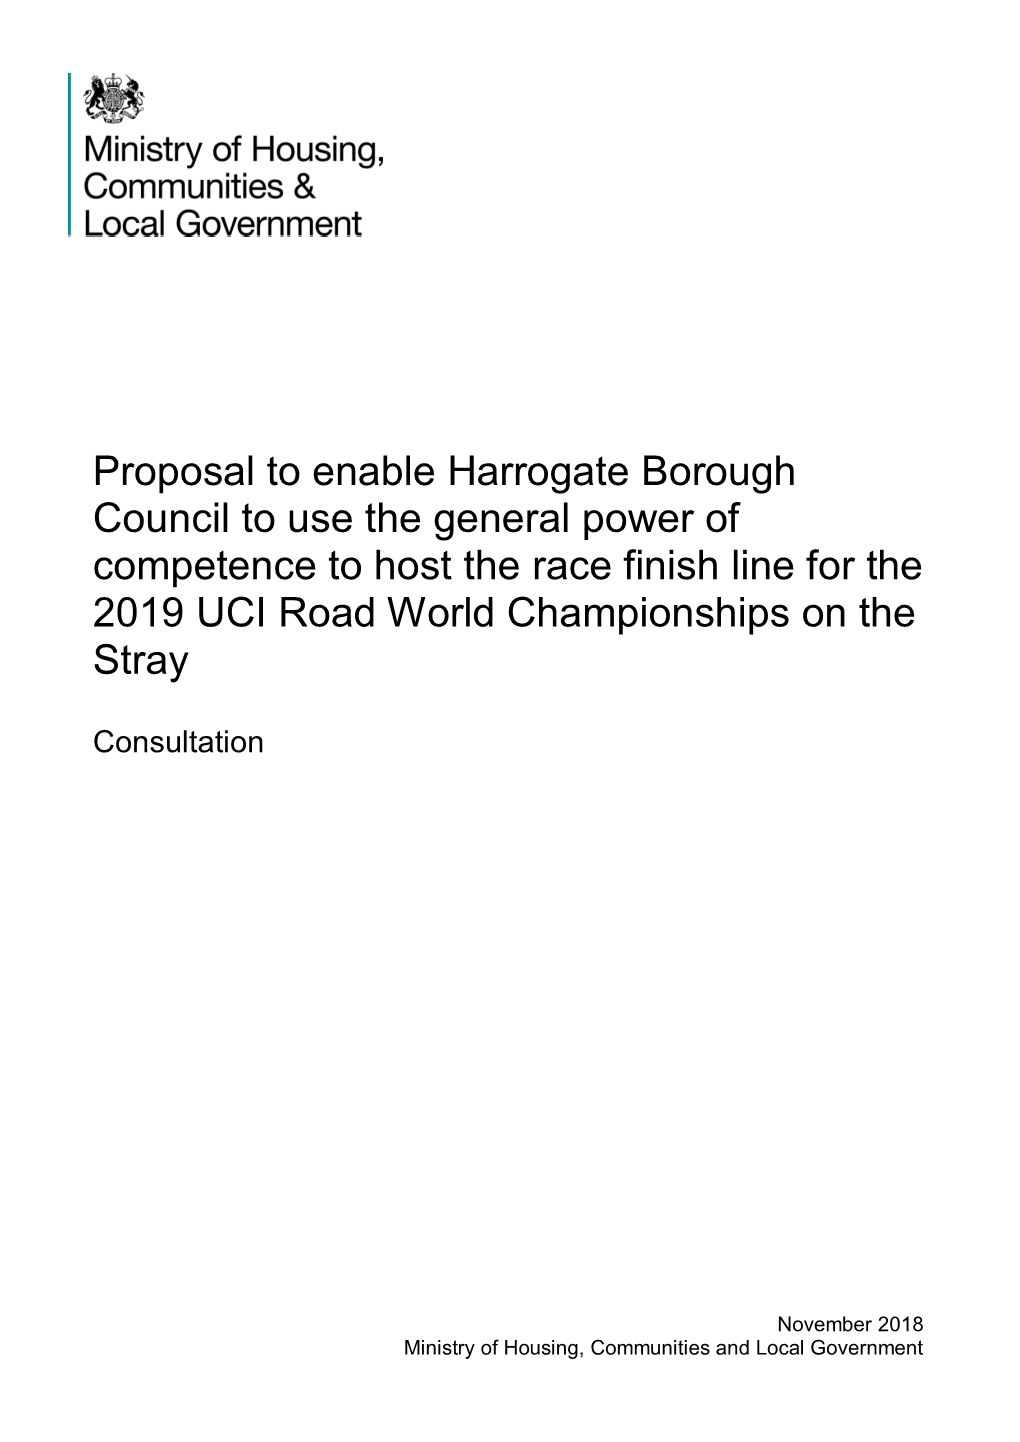 Proposal to Enable Harrogate Borough Council To